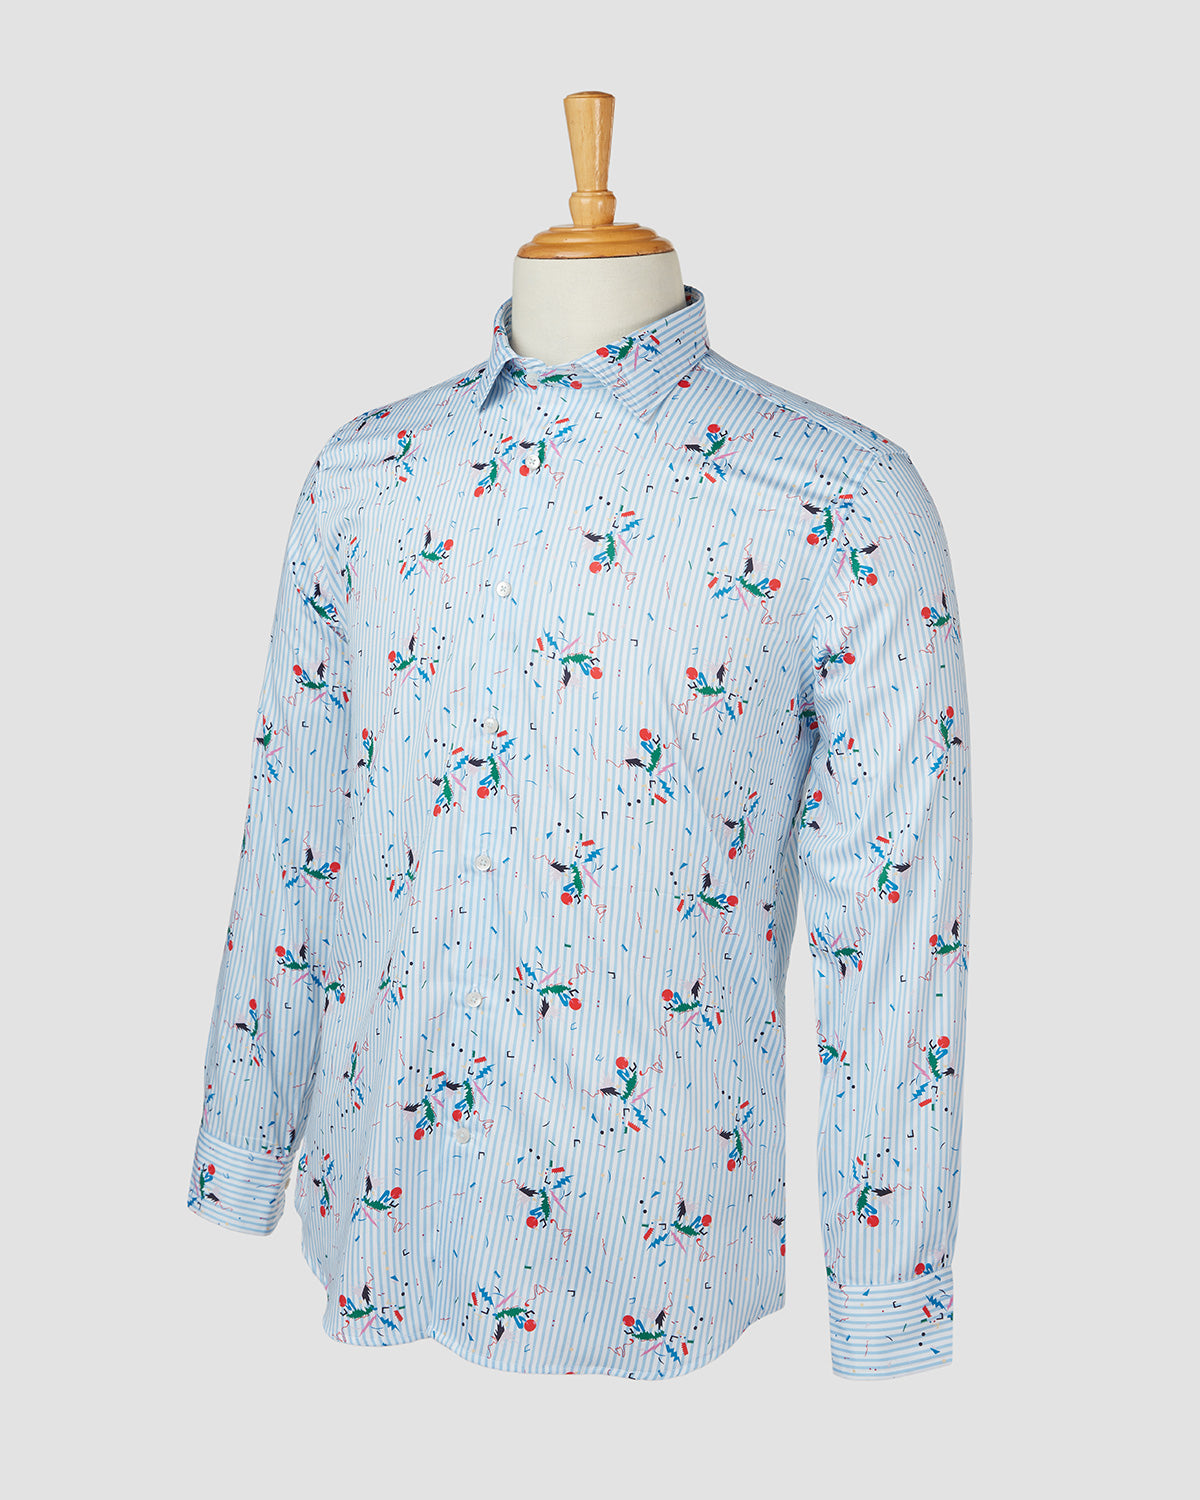 Bombay Shirt Company - Japanese Flora Confetti Shirt